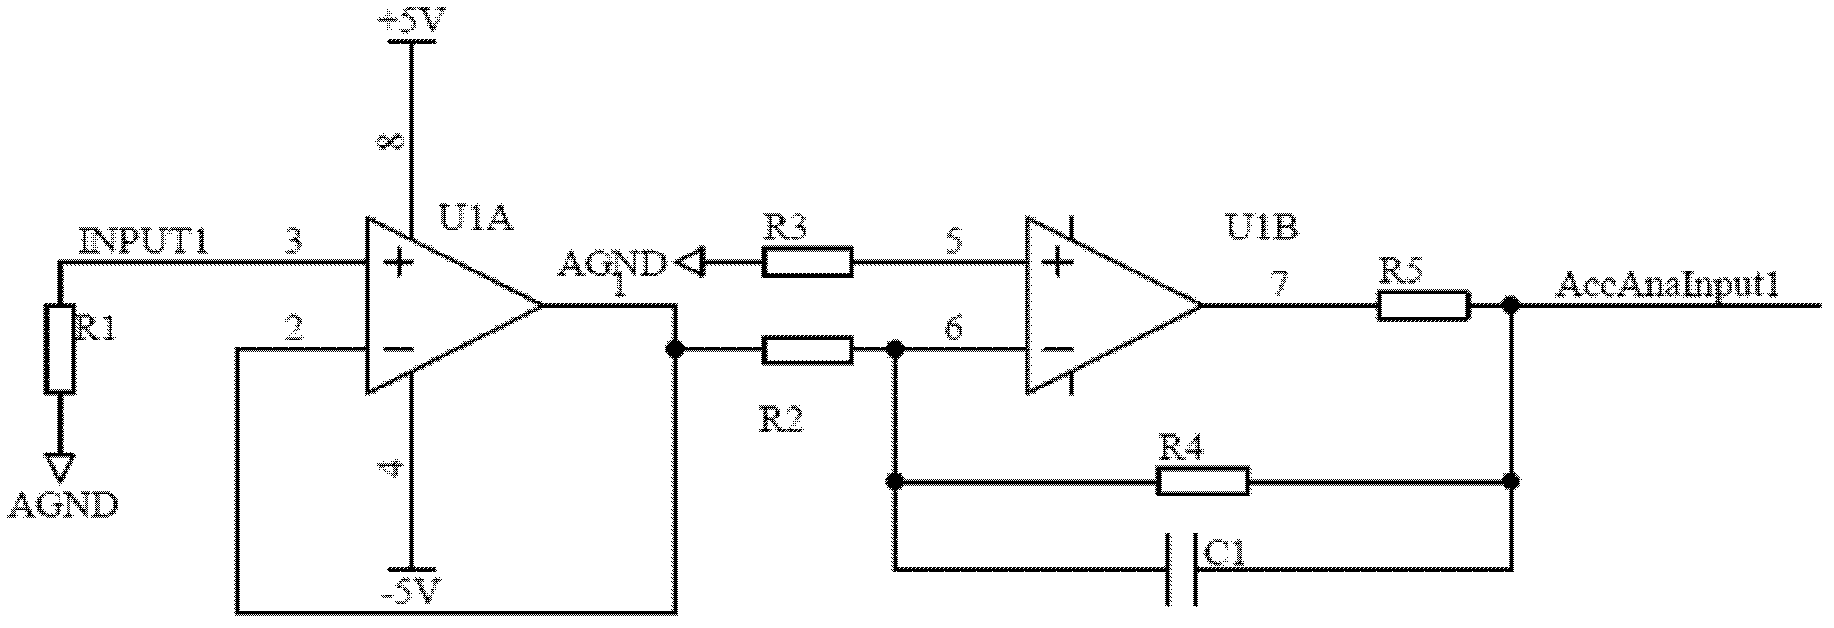 Transformer winding temperature measuring device based on fluorescent fiber technique